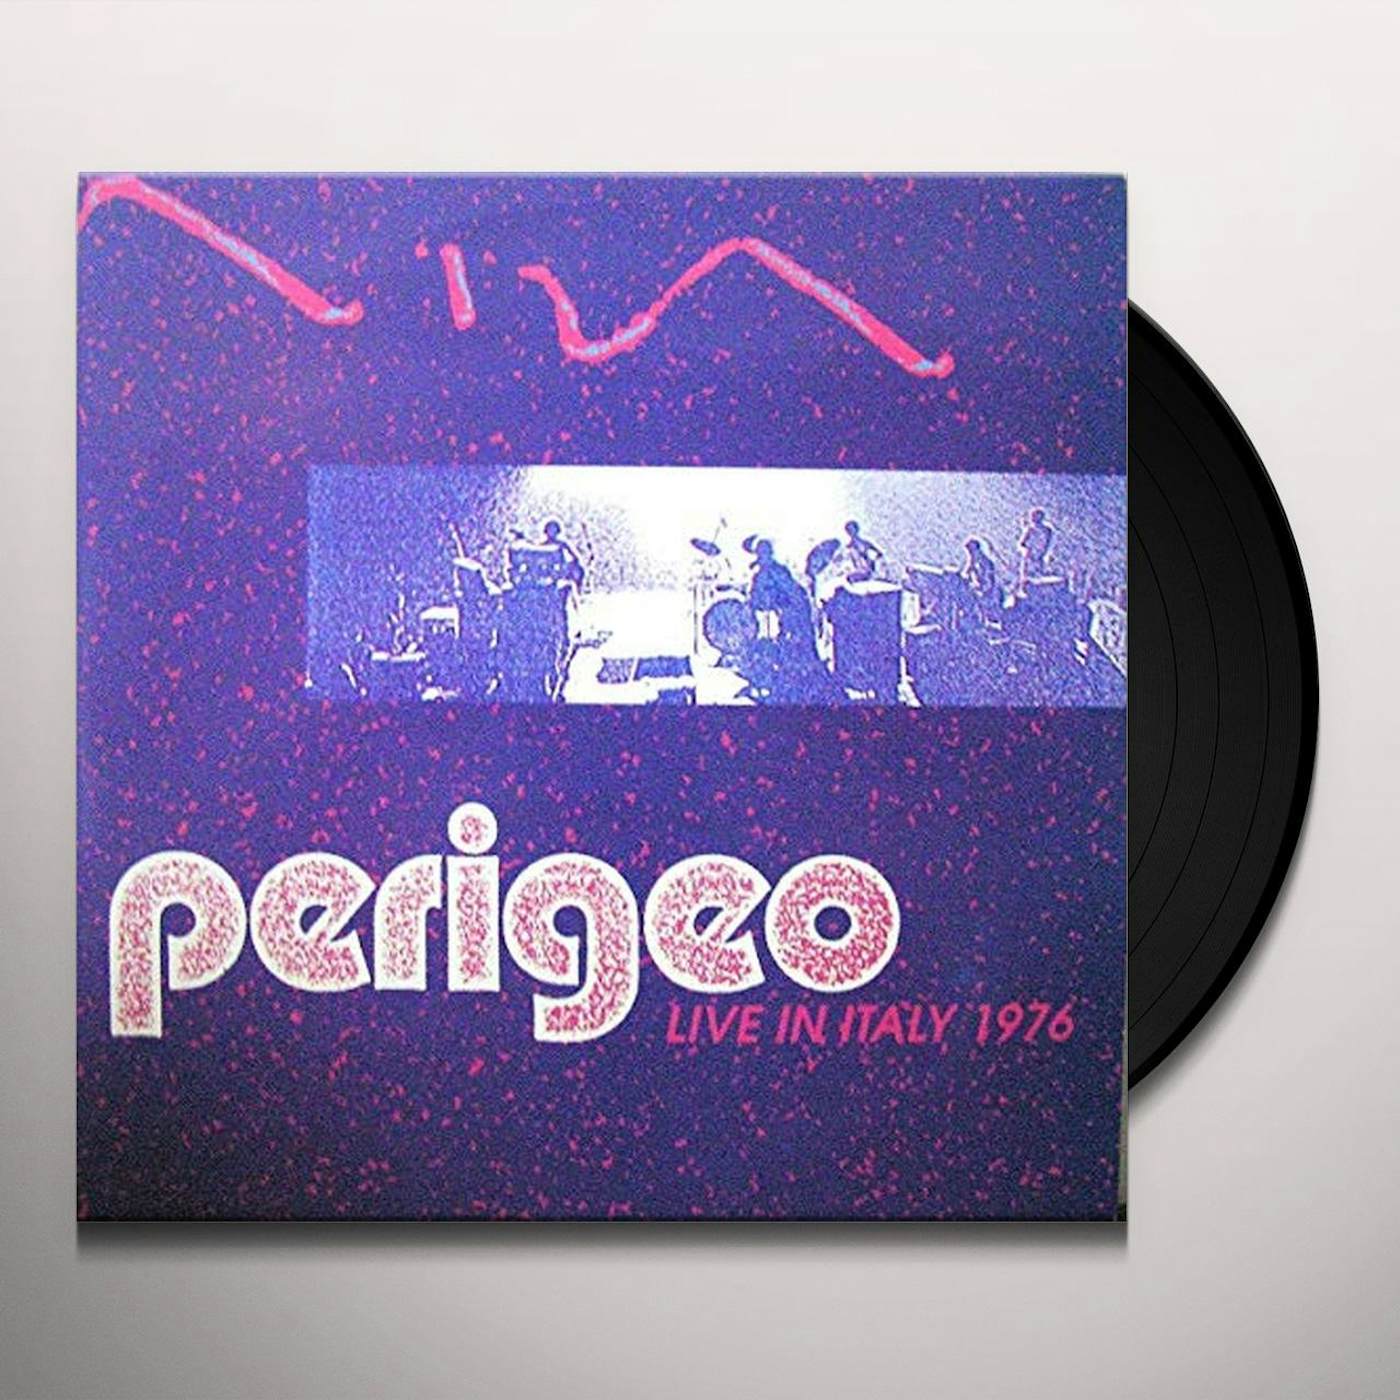 Perigeo Live In Italy 1976 Vinyl Record